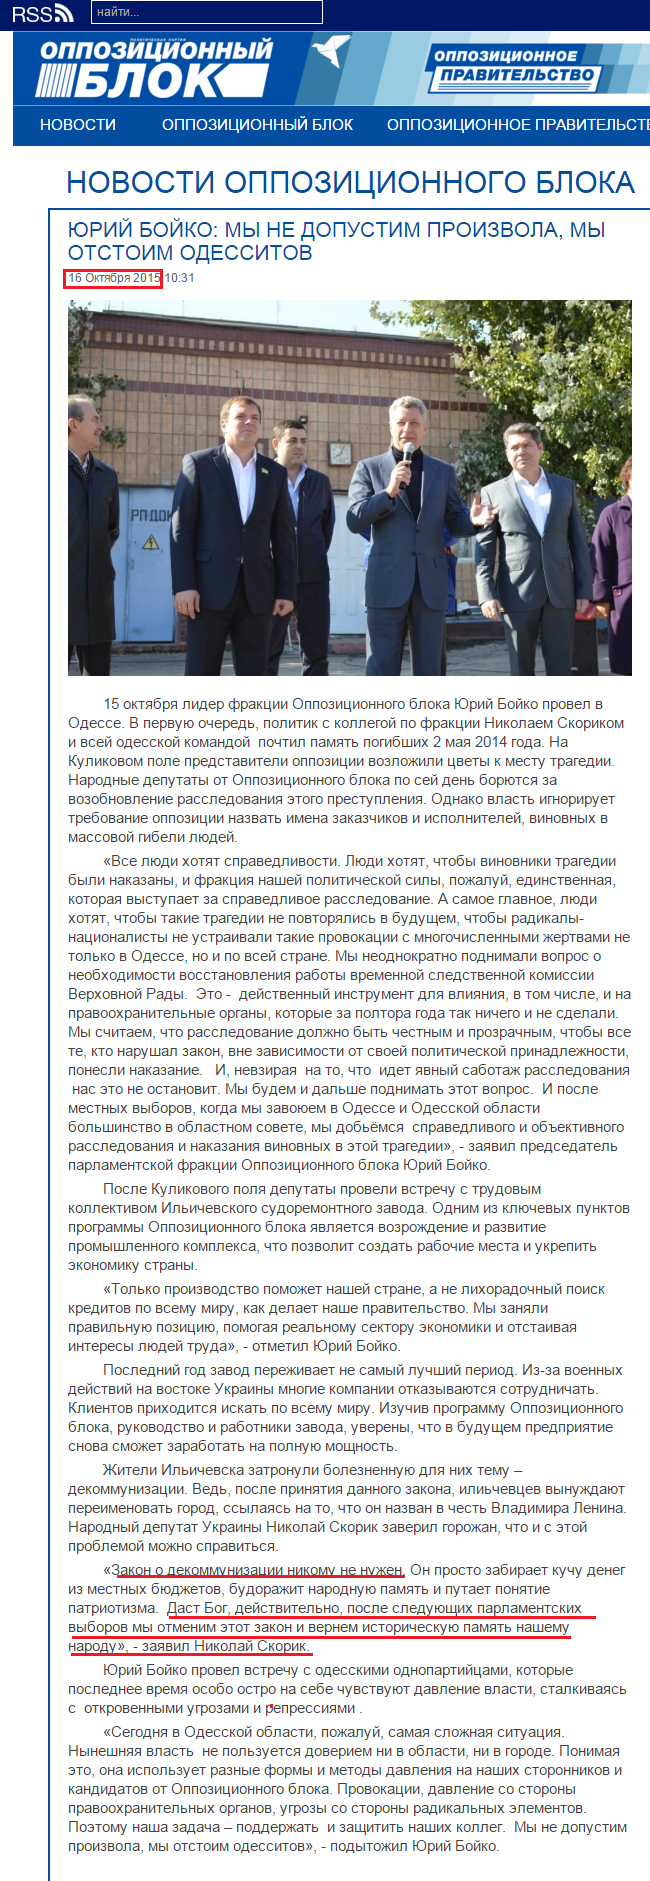 http://opposition.org.ua/news/yurij-bojko-mi-ne-dopustimo-svavillya-mi-vidstomo-odesitiv.html